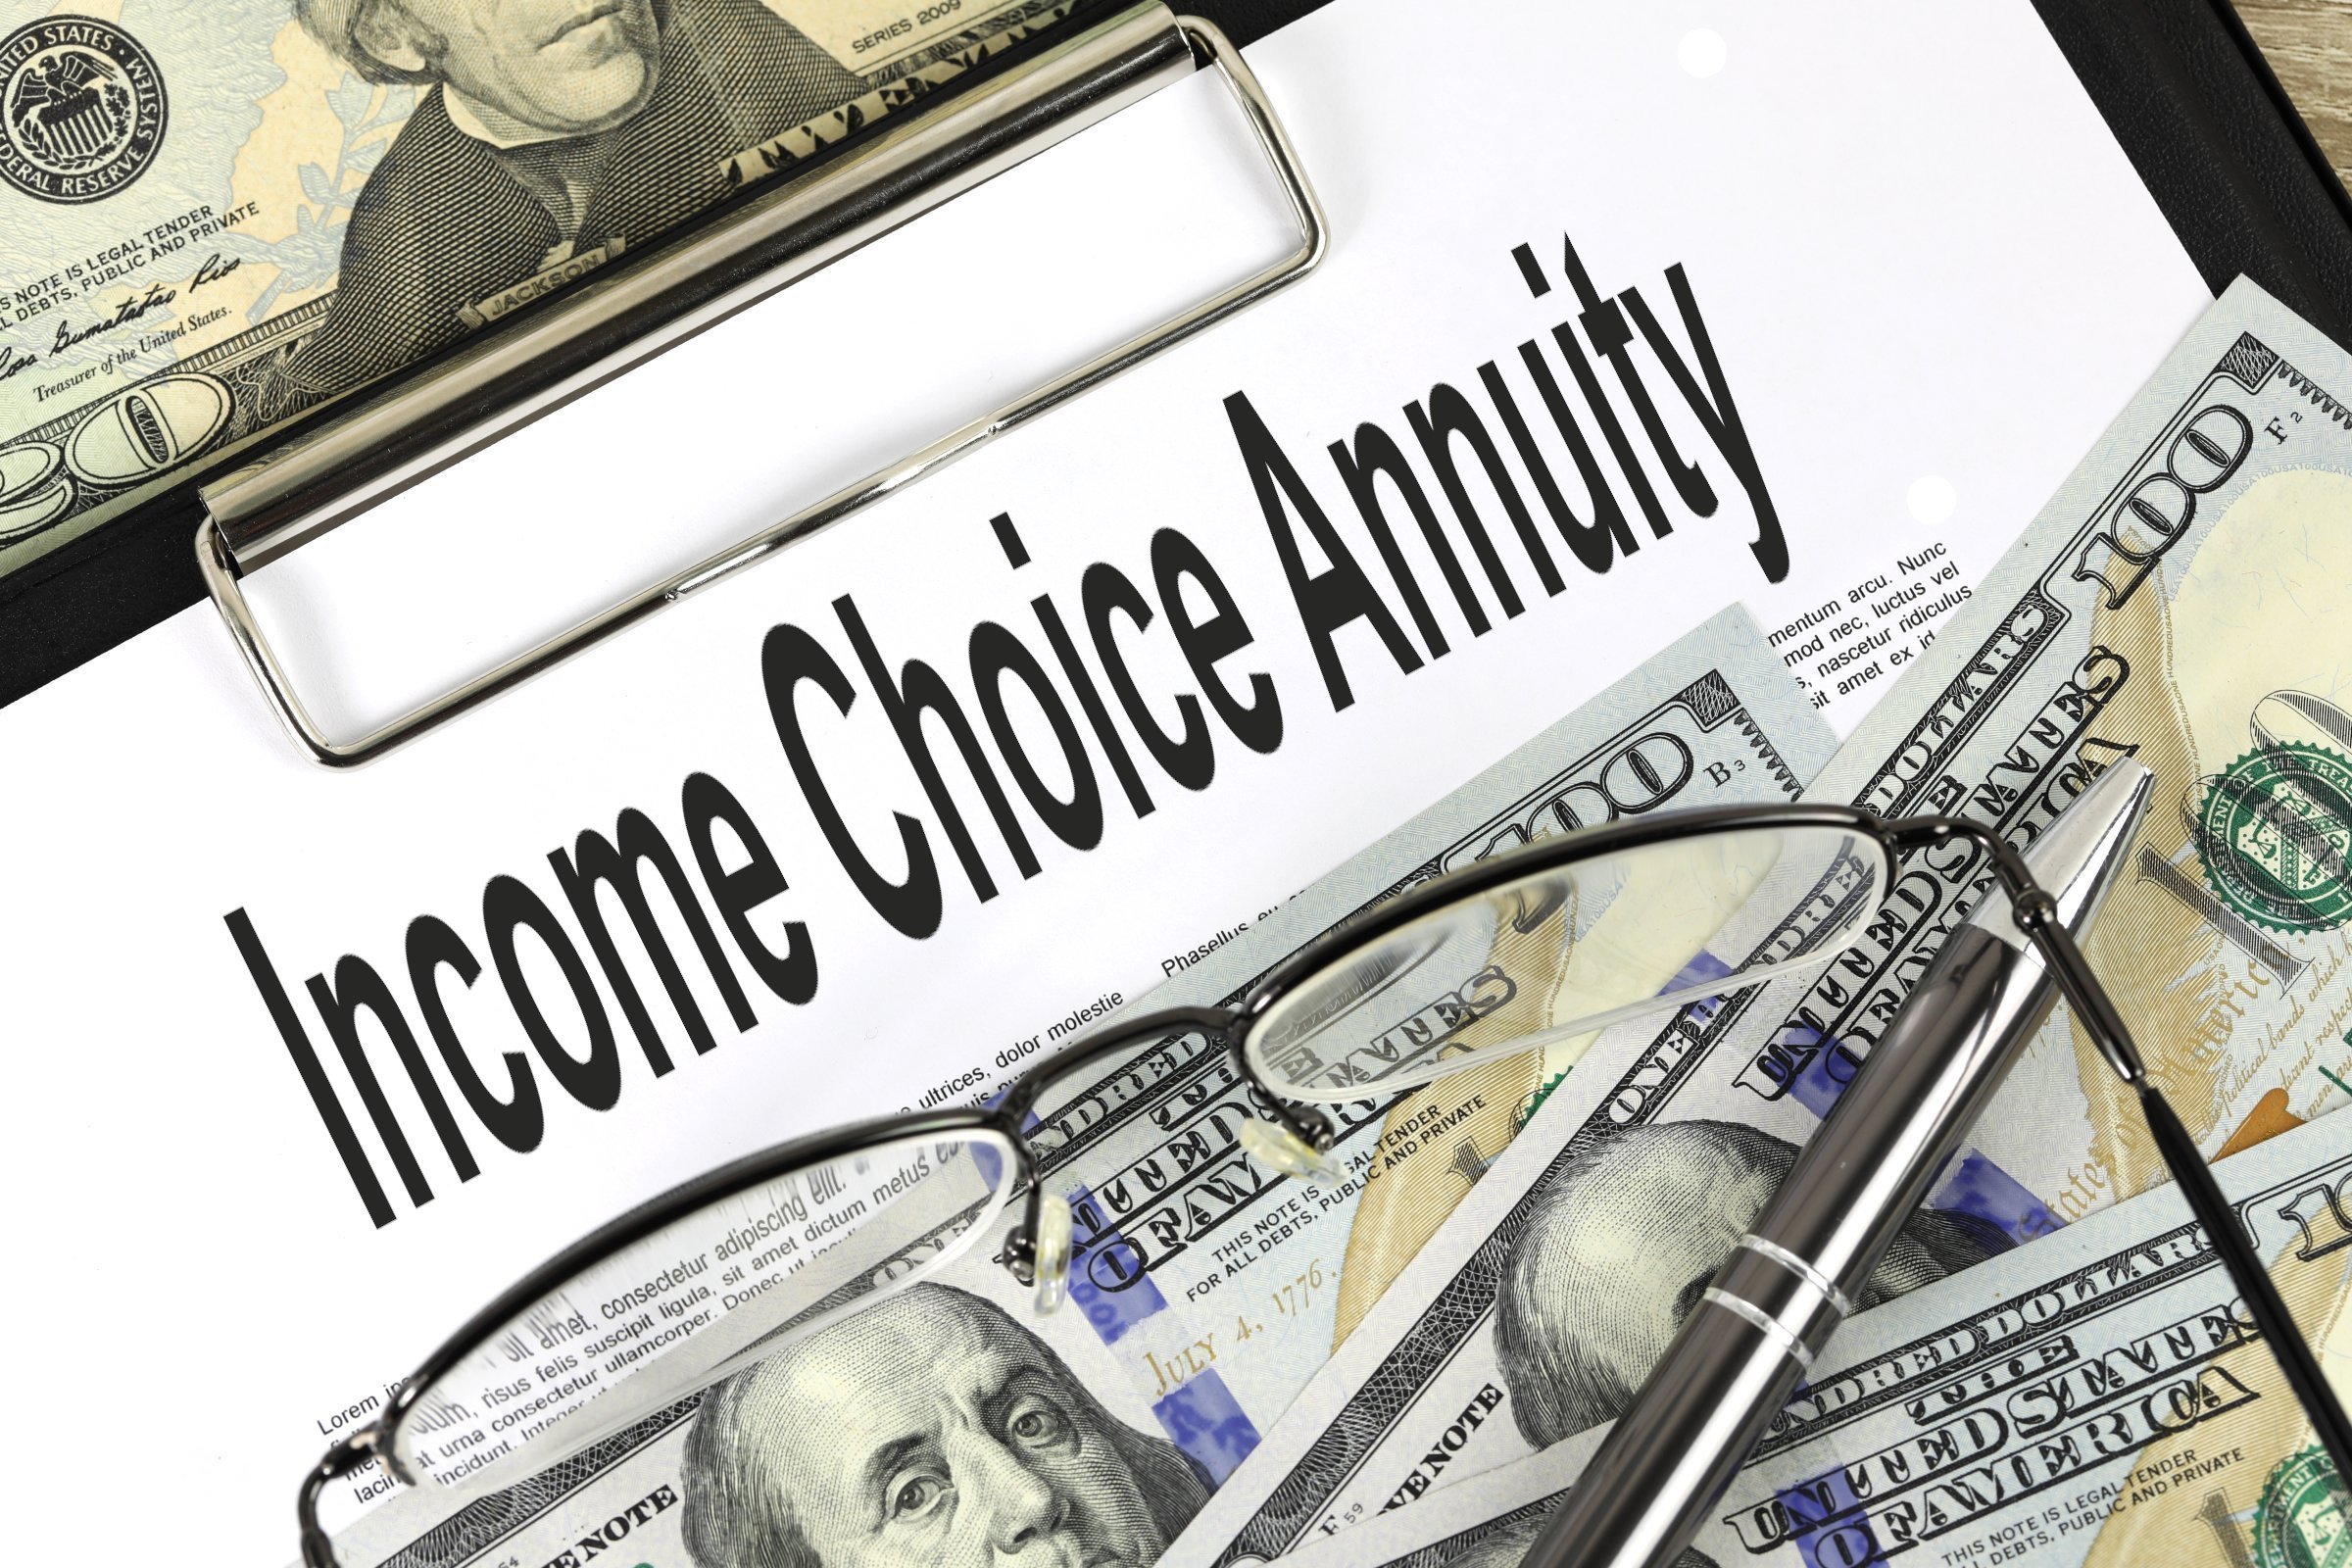 income choice annuity